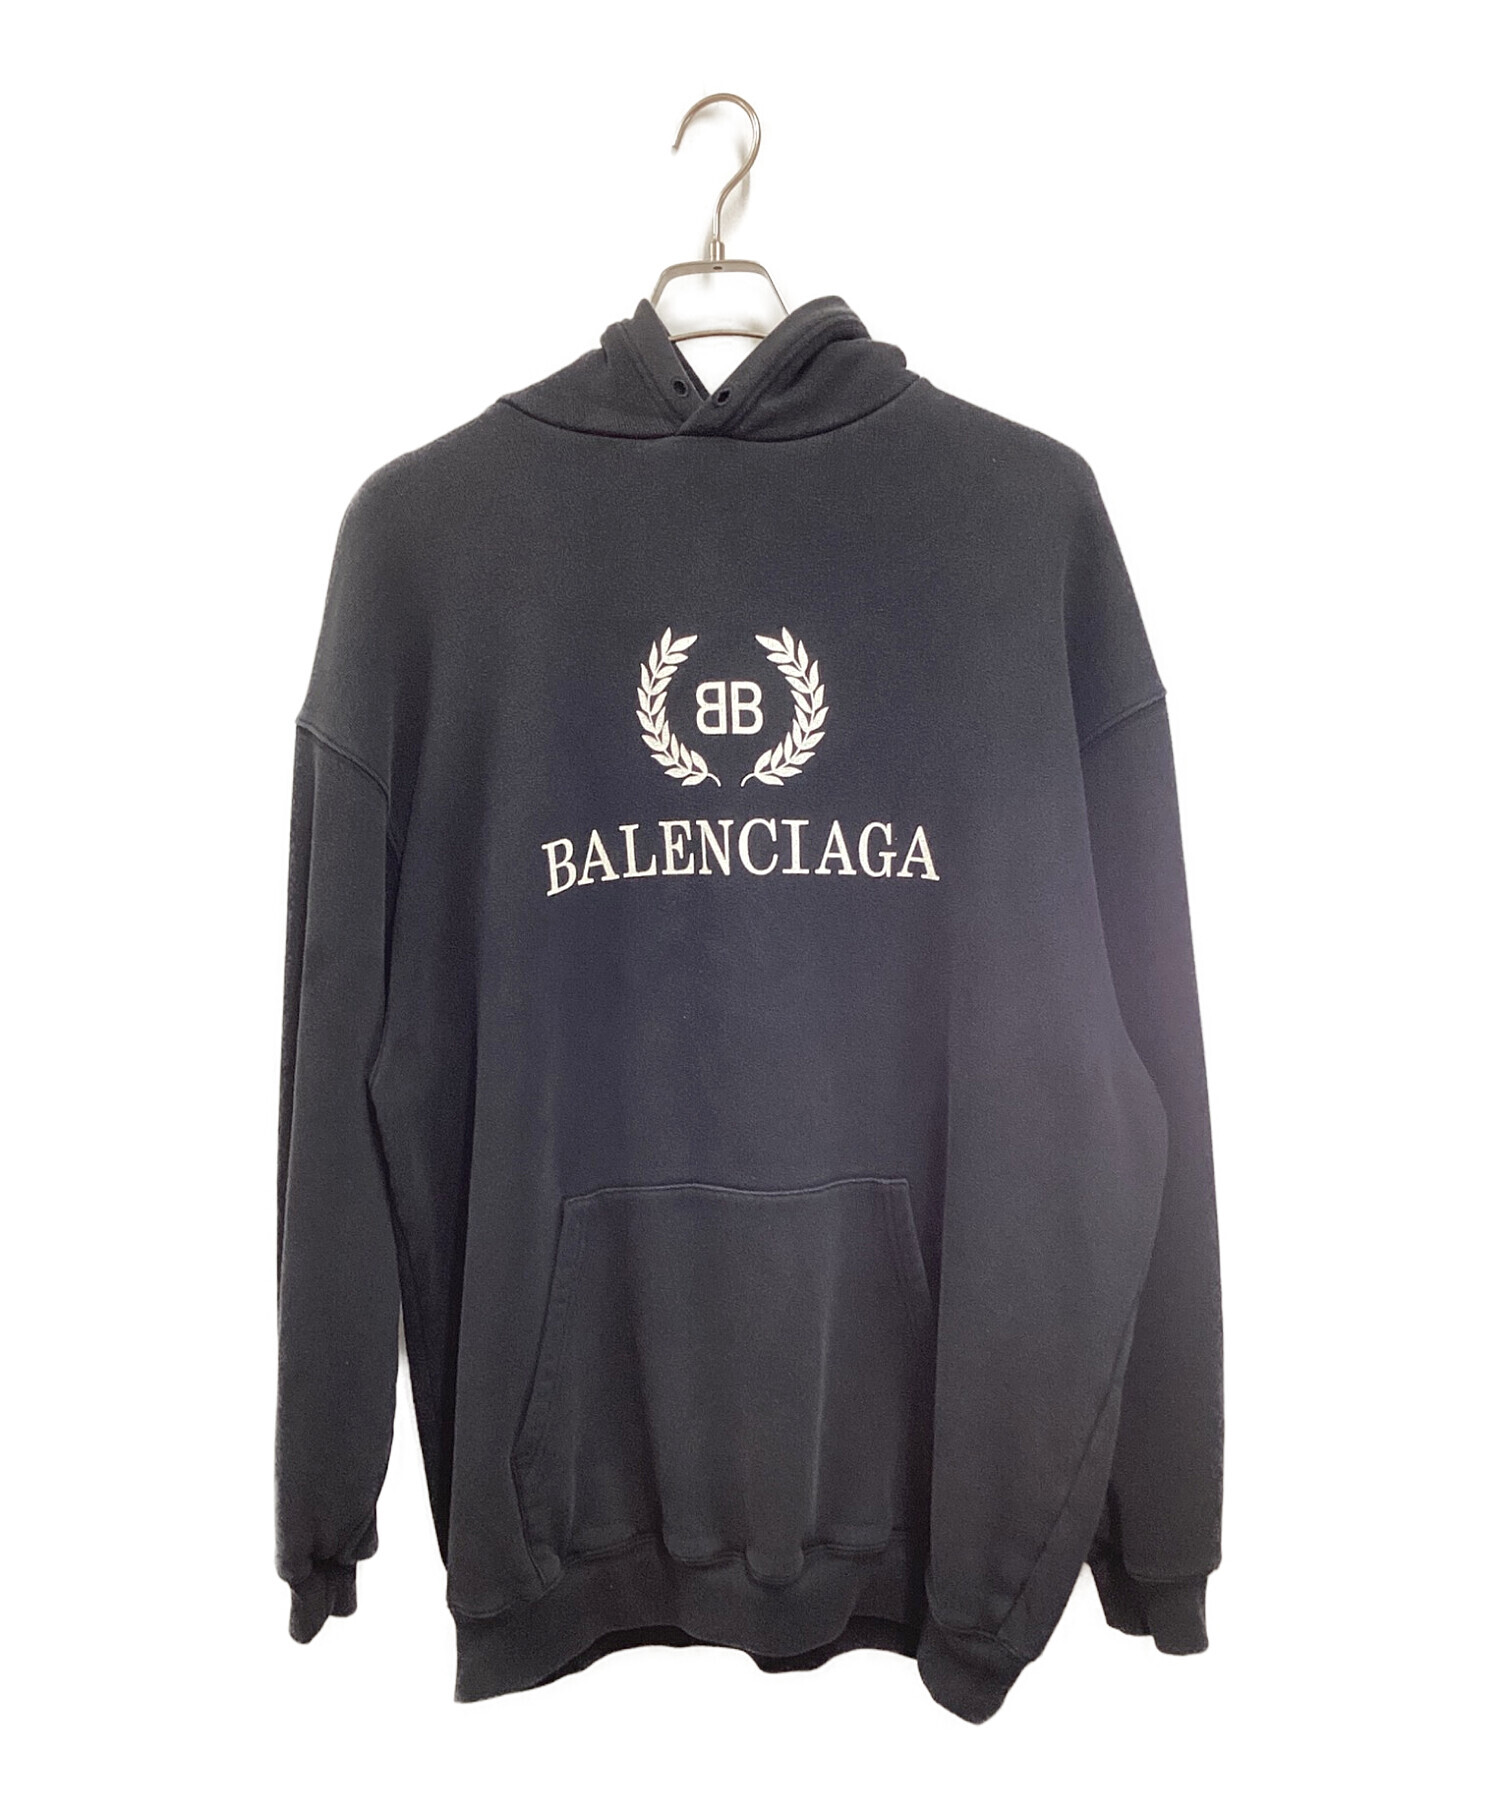 BALENCIAGA (バレンシアガ) BBロゴプルオーバーパーカー ブラック サイズ:XS